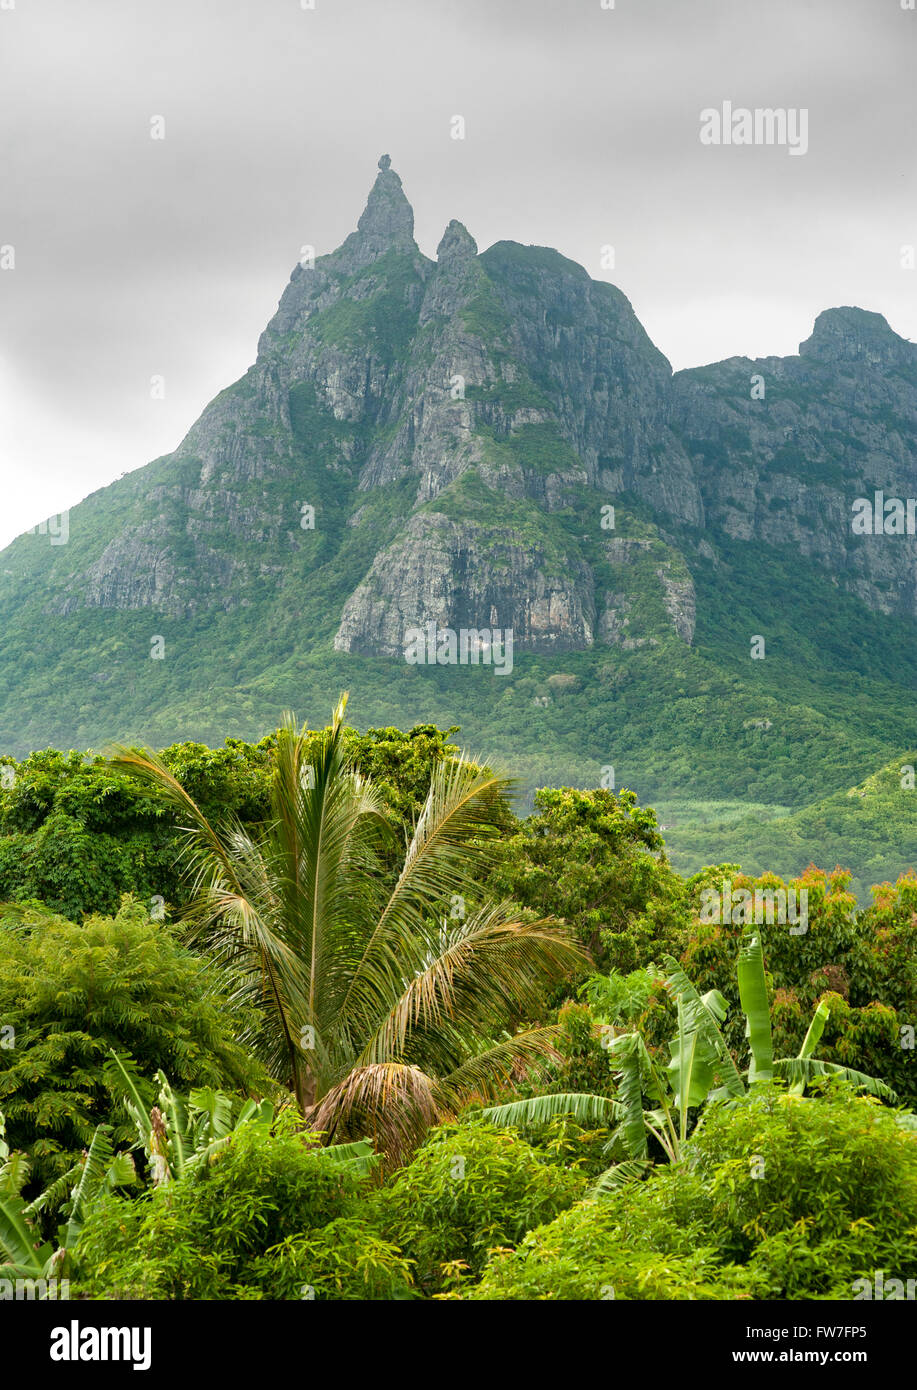 Le Pouce (The Thumb) mountain peak and surrounding vegetation in Mauritius. Stock Photo